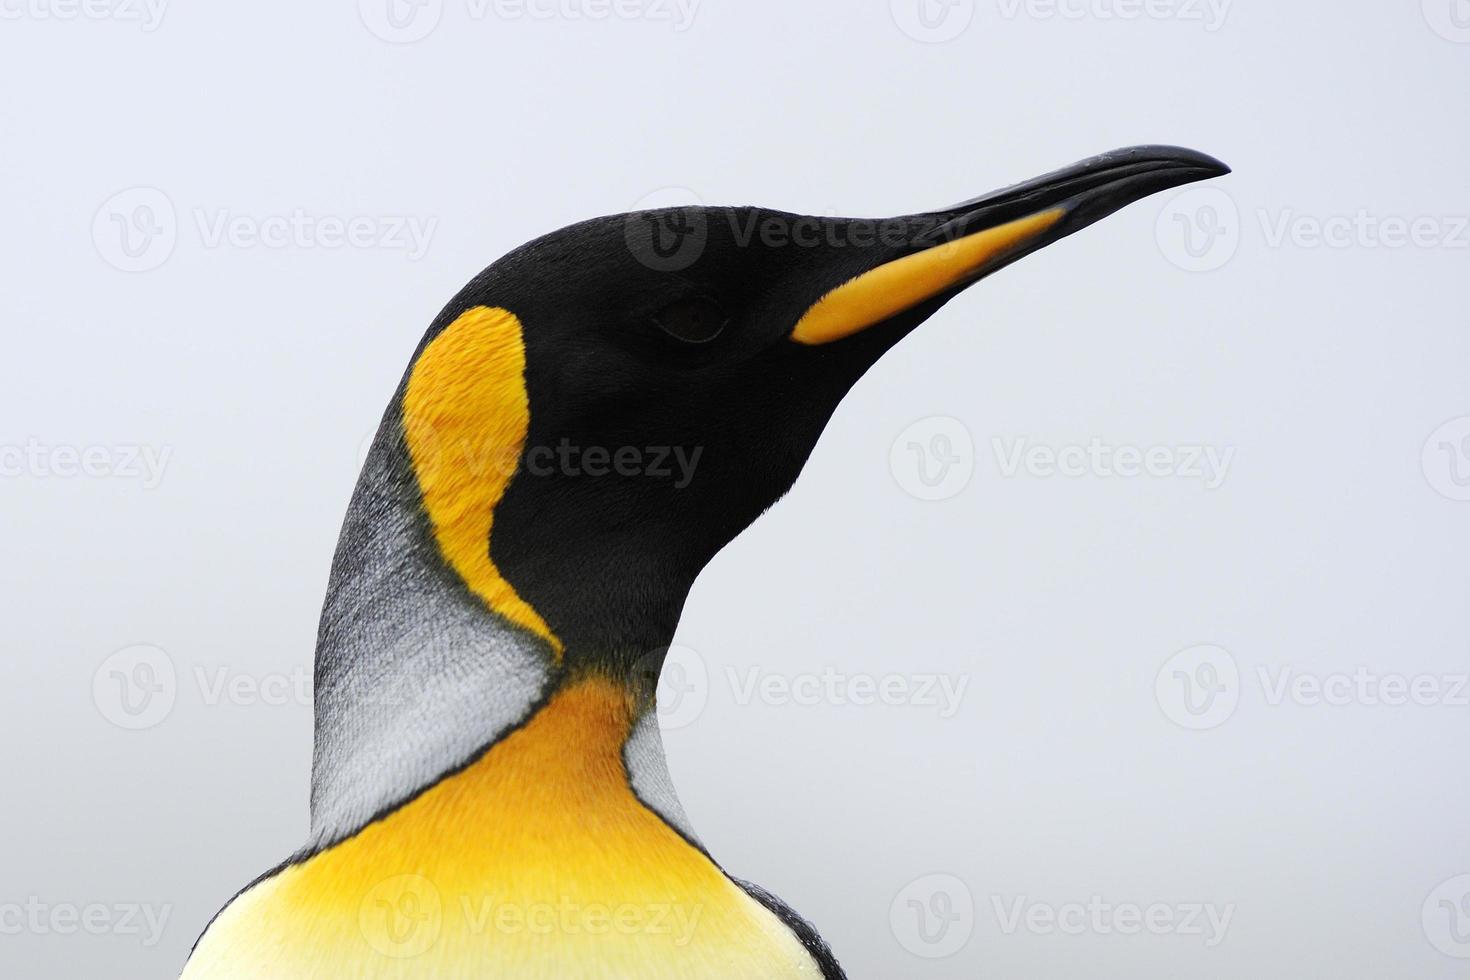 pinguim-rei (aptenodytes patagonicus) foto